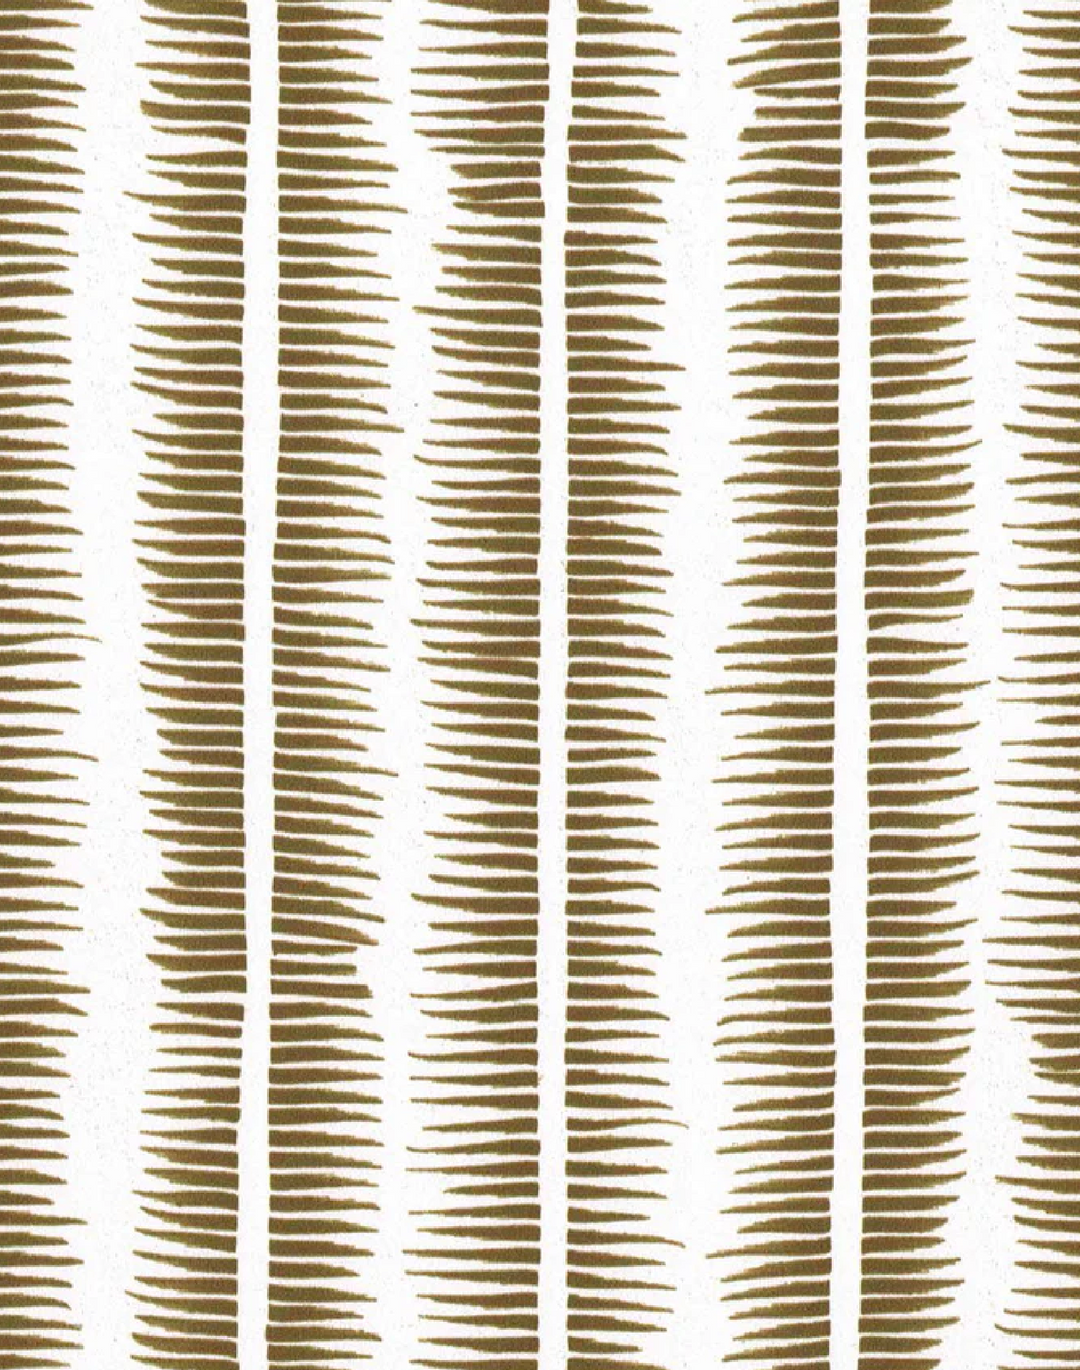 Textured Stripe, Gold on White